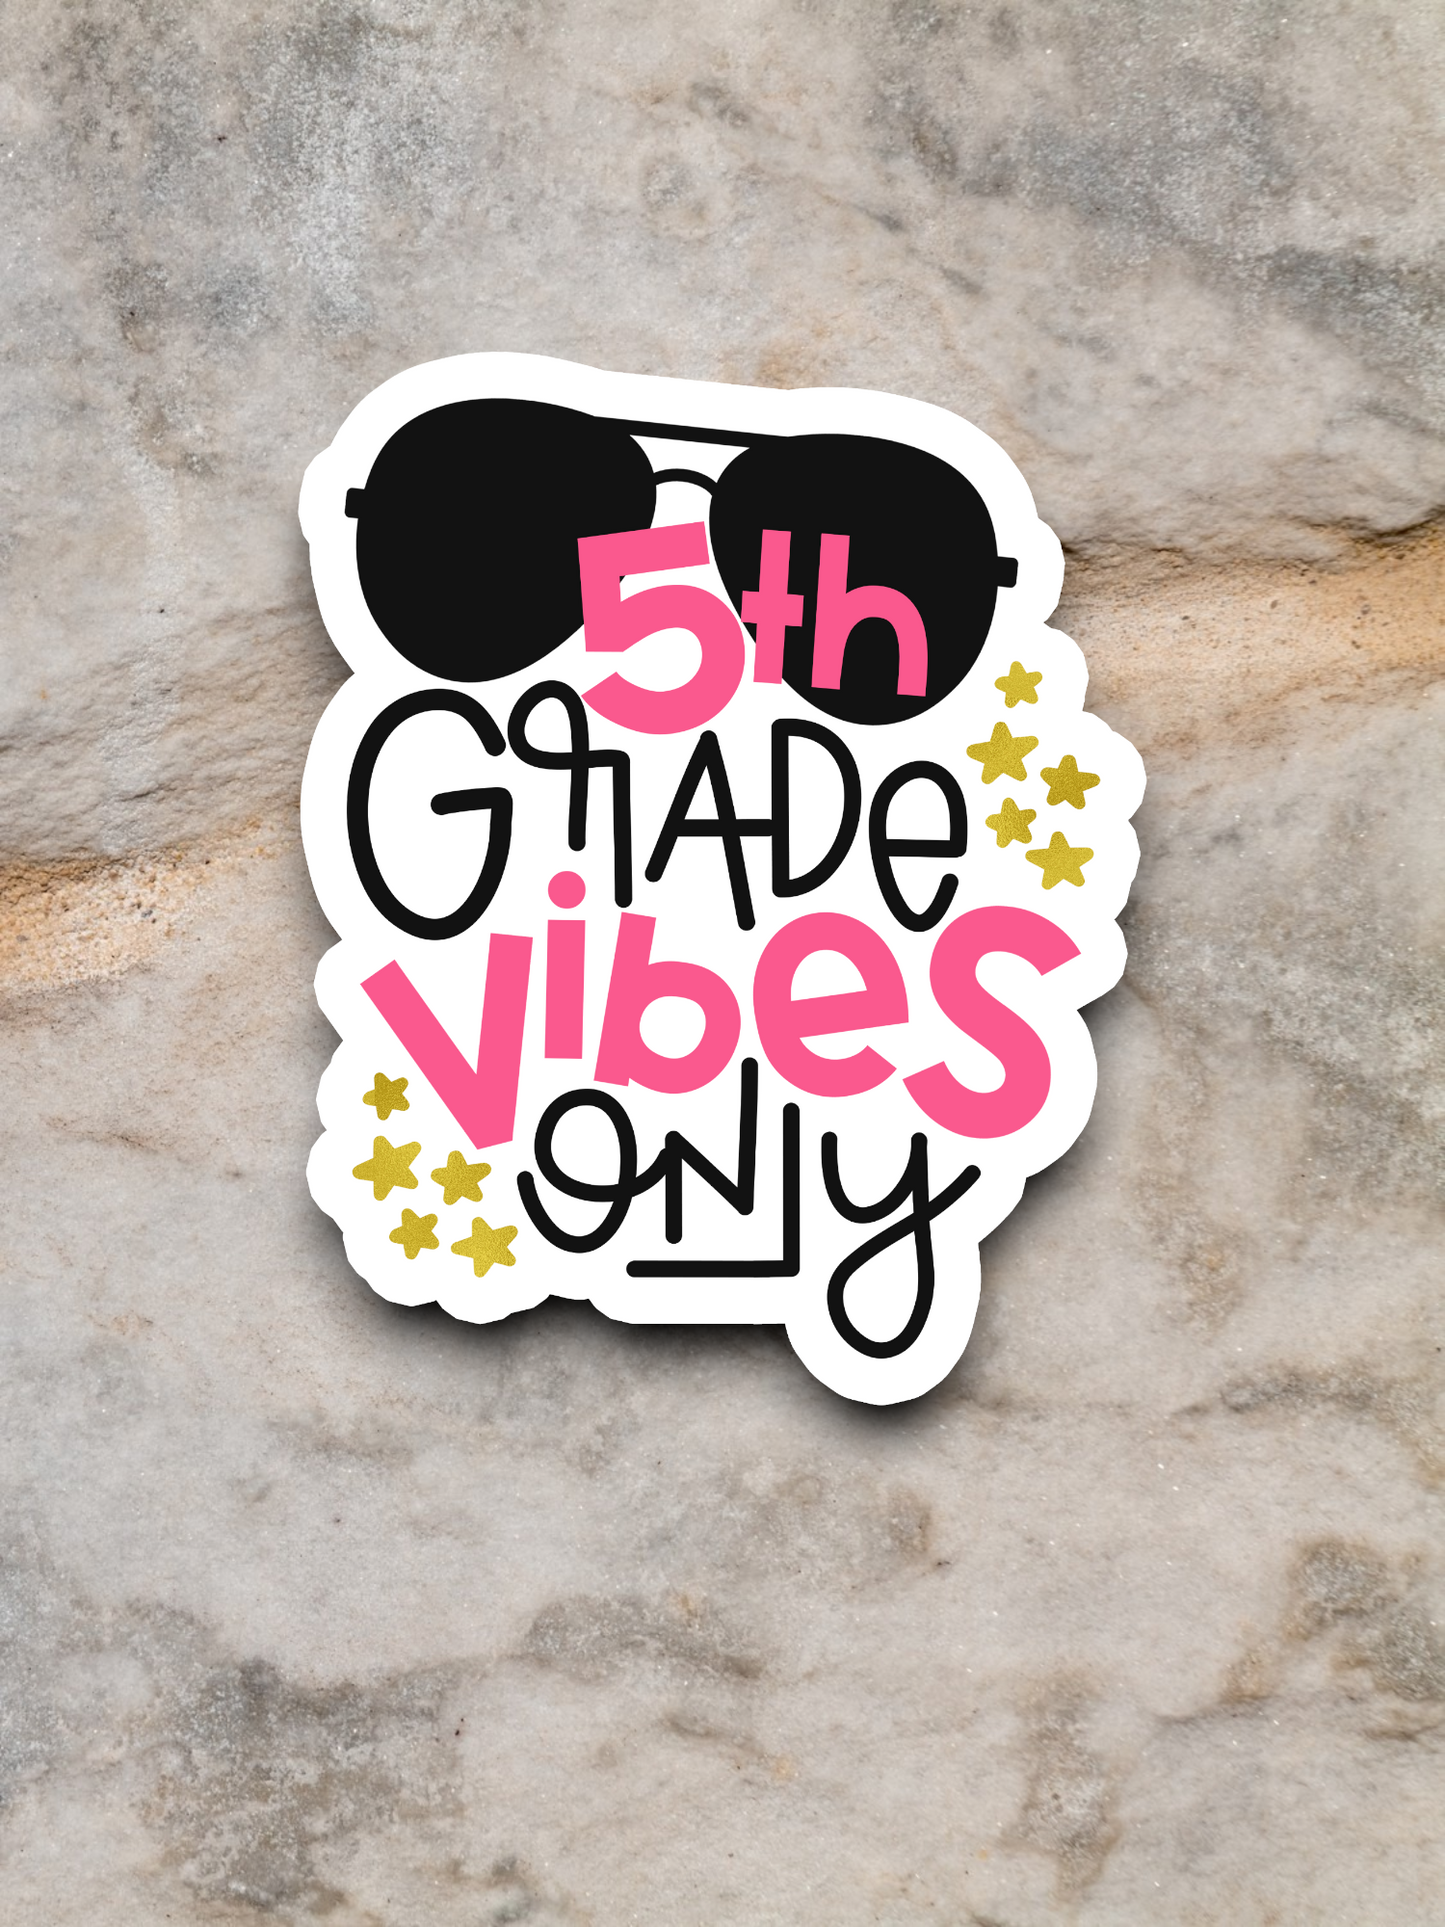 5th Grade Vibes Only - School Sticker